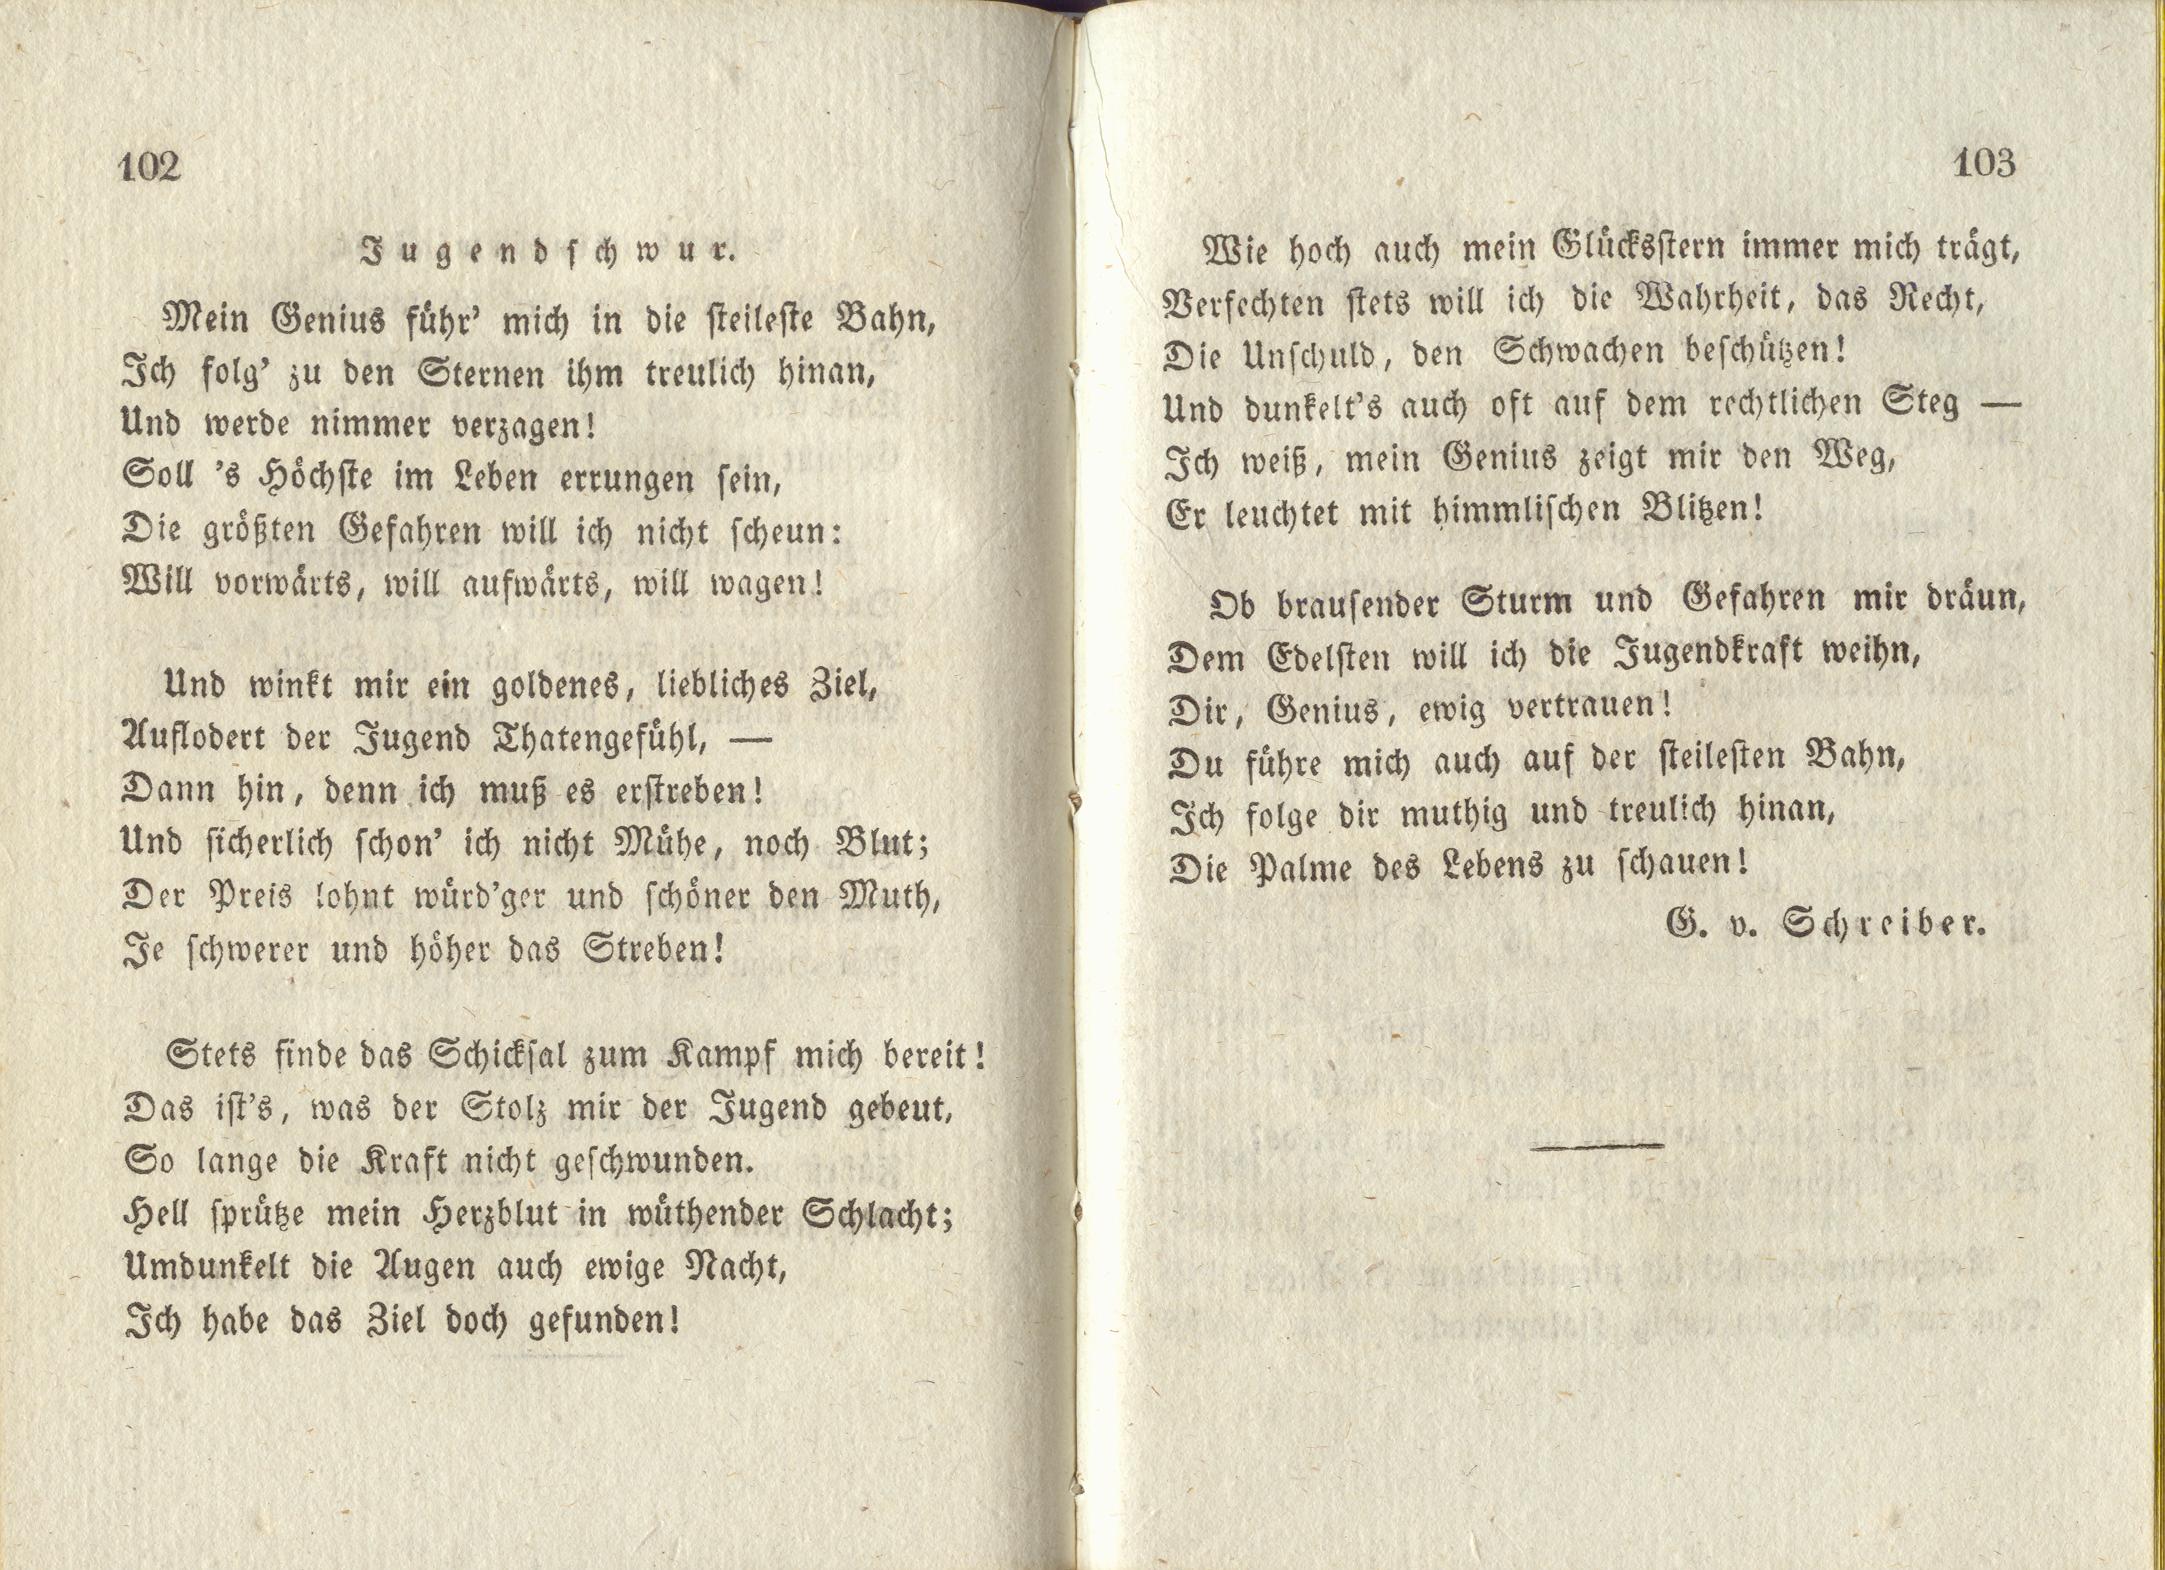 Jugendschwur (1830) | 1. (102-103) Основной текст